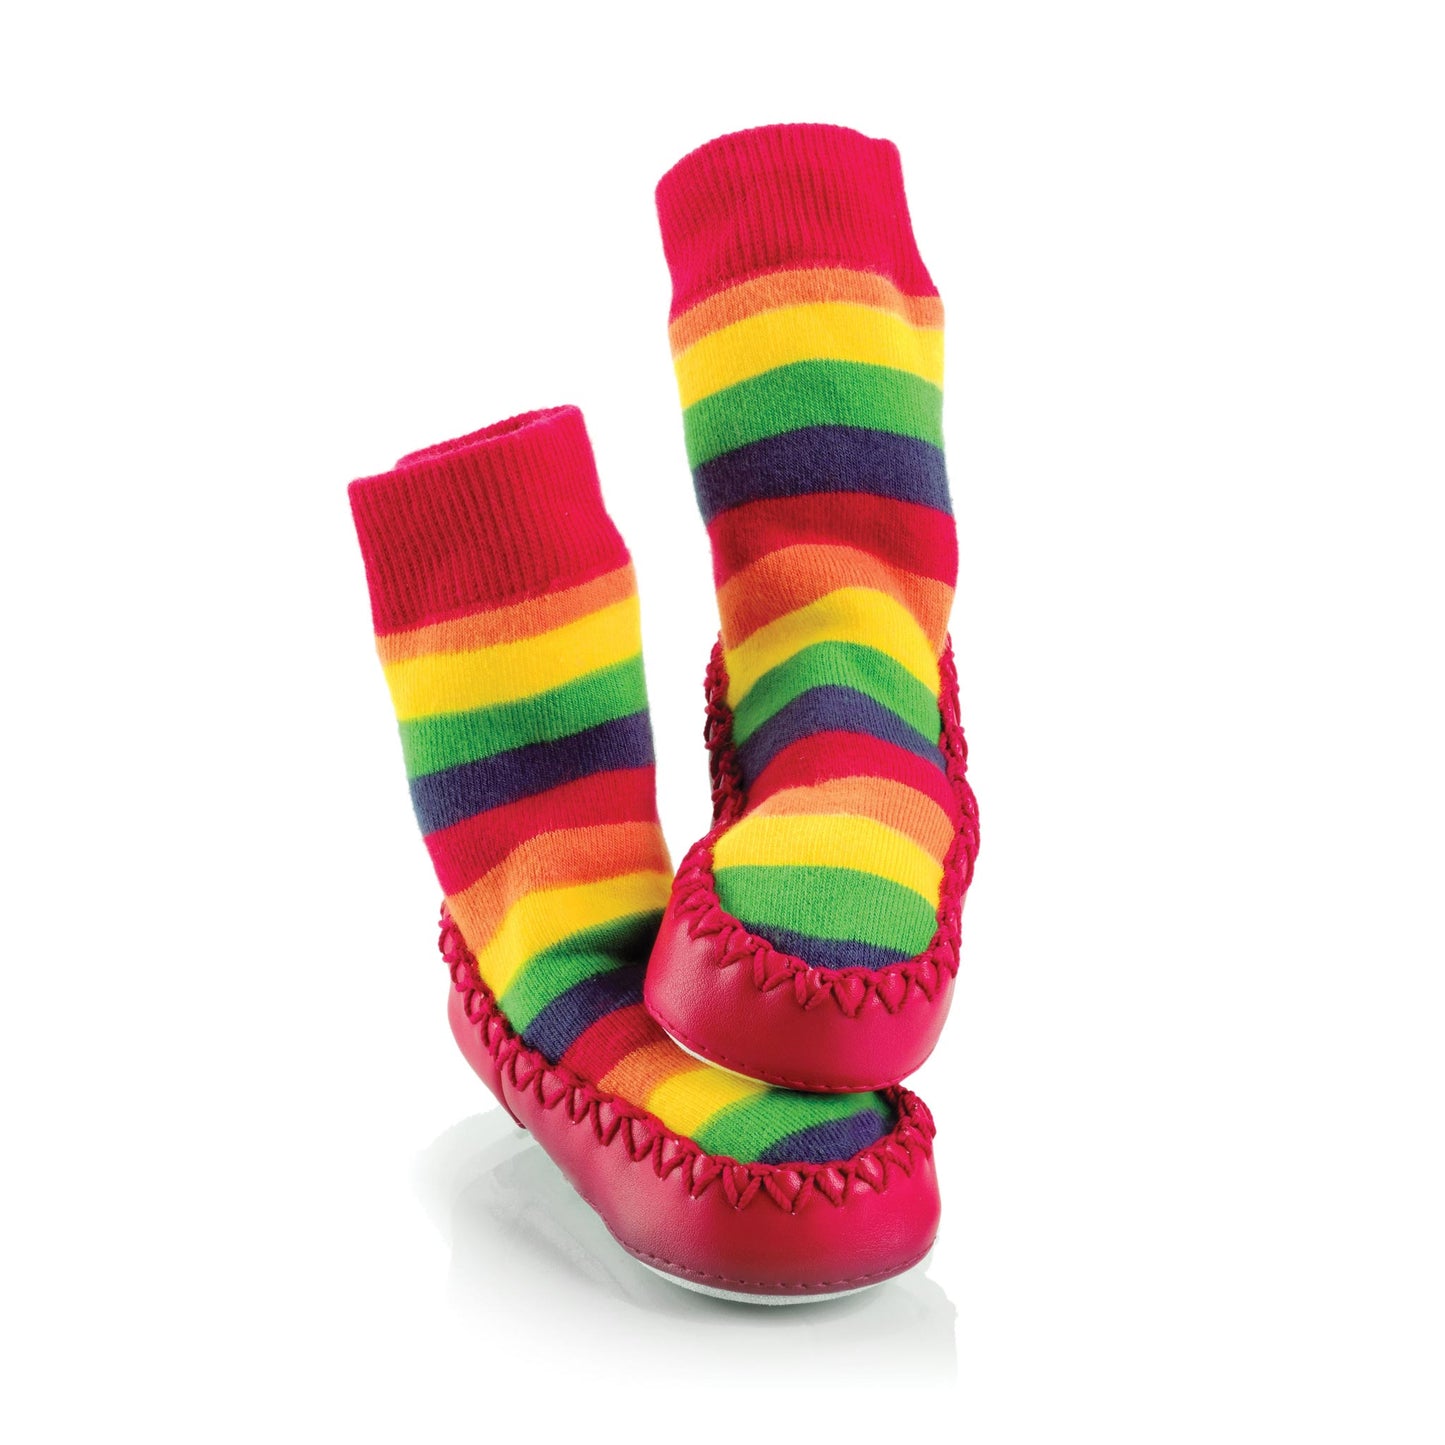 Mocc Ons Slipper Socks (Rainbow Stripe)